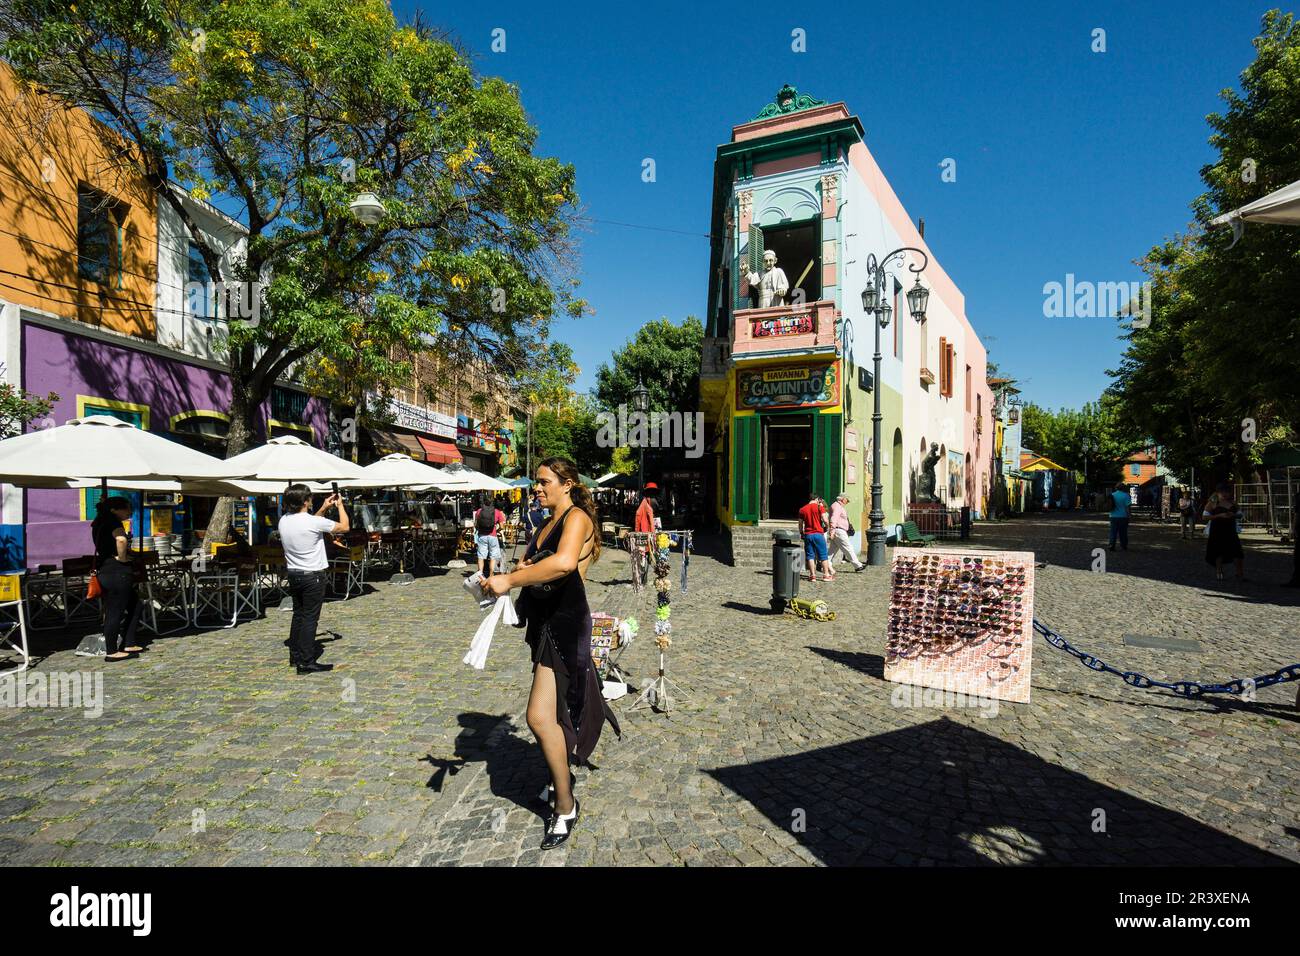 Caminito, Barrio de La Boca, Buenos Aires, Republica Argentina, cono sur, Sud America. Foto Stock